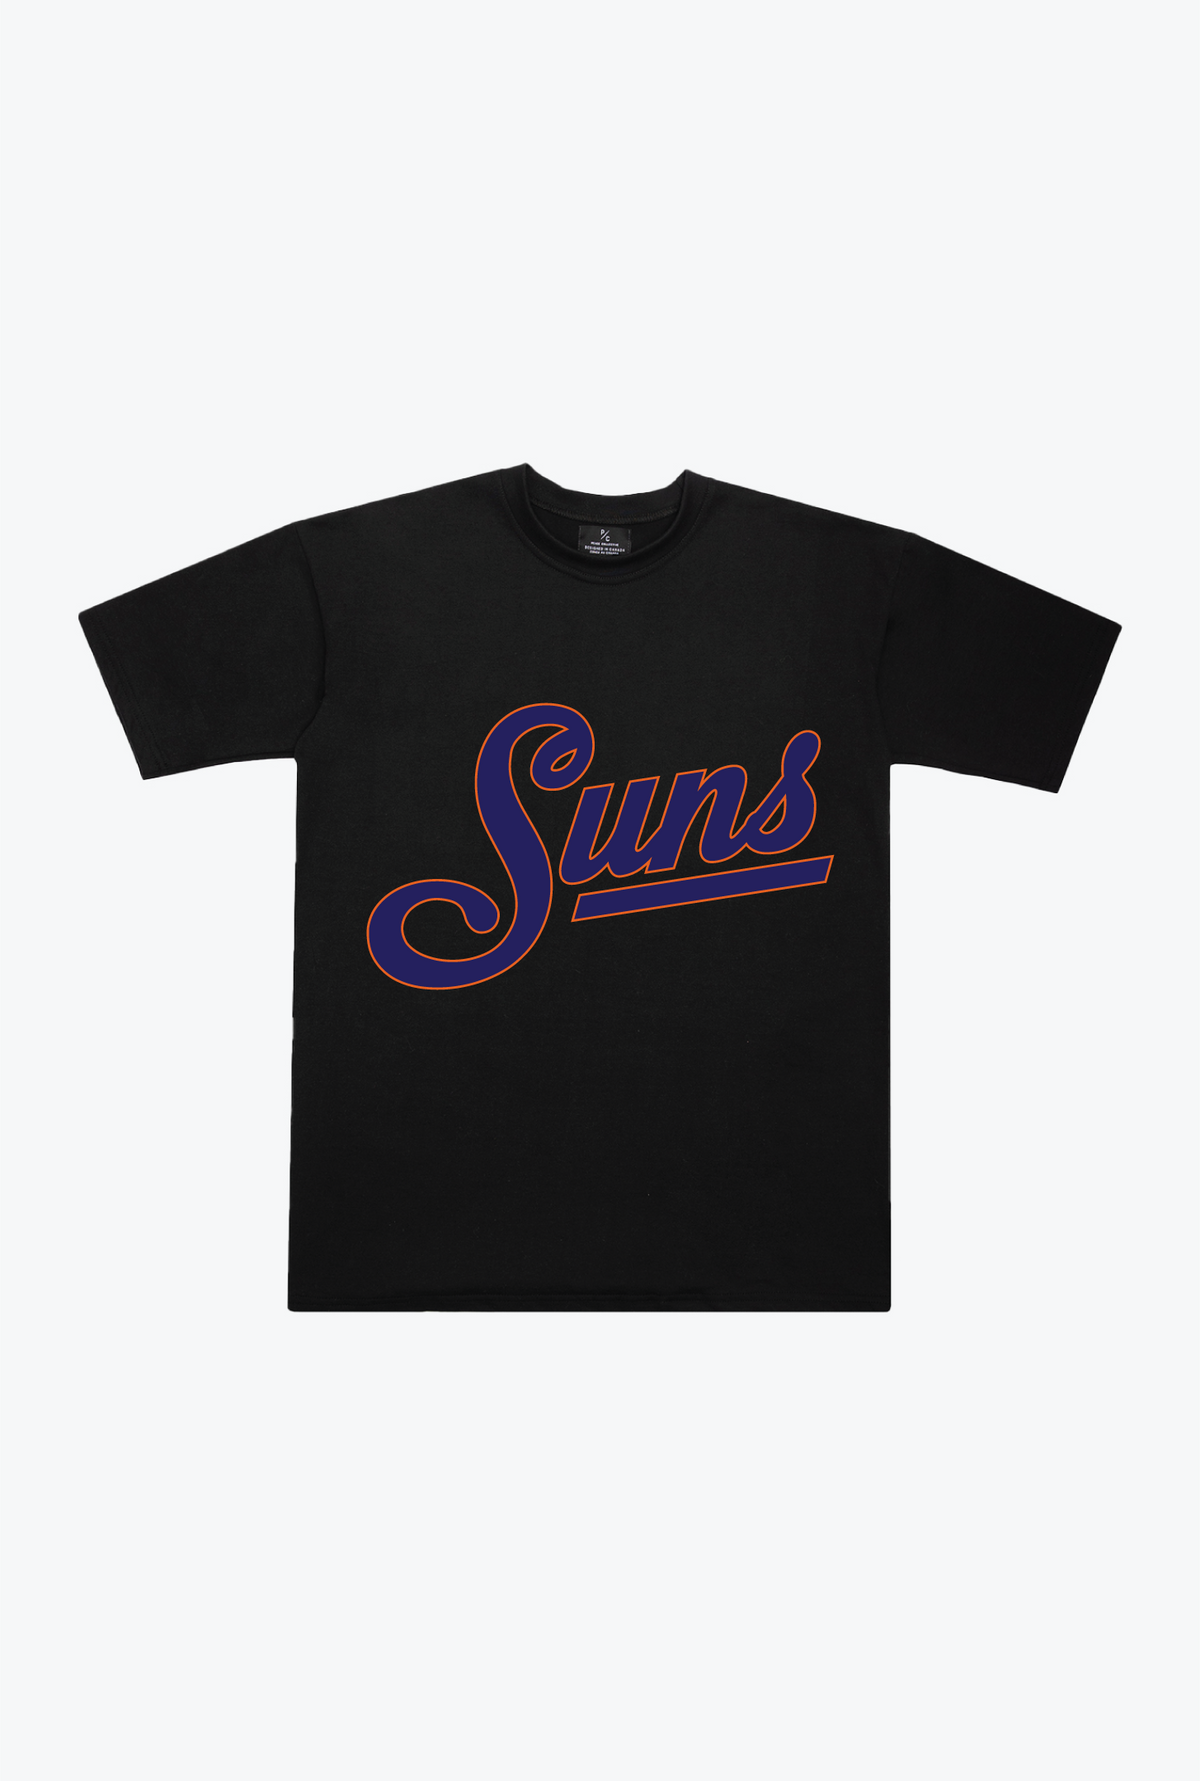 Phoenix Suns Heavyweight T-Shirt - Black